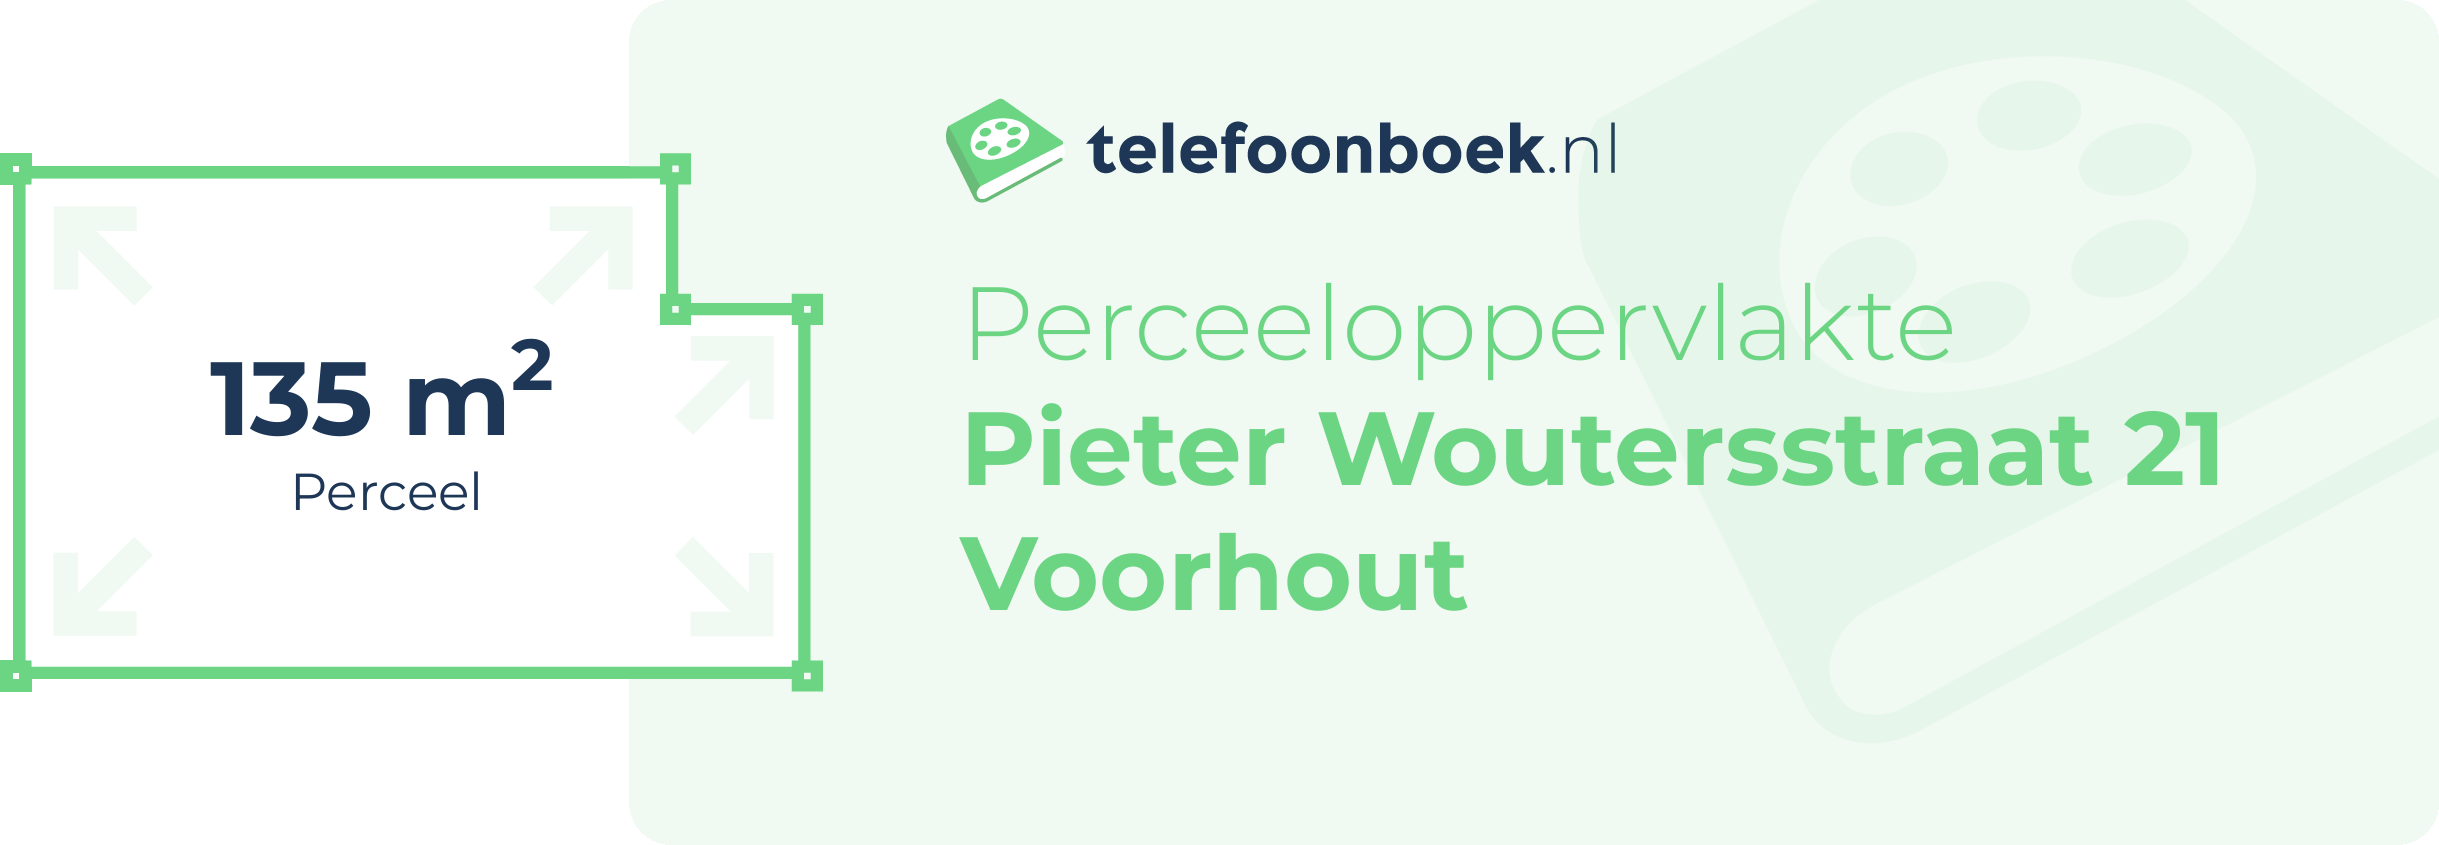 Perceeloppervlakte Pieter Woutersstraat 21 Voorhout